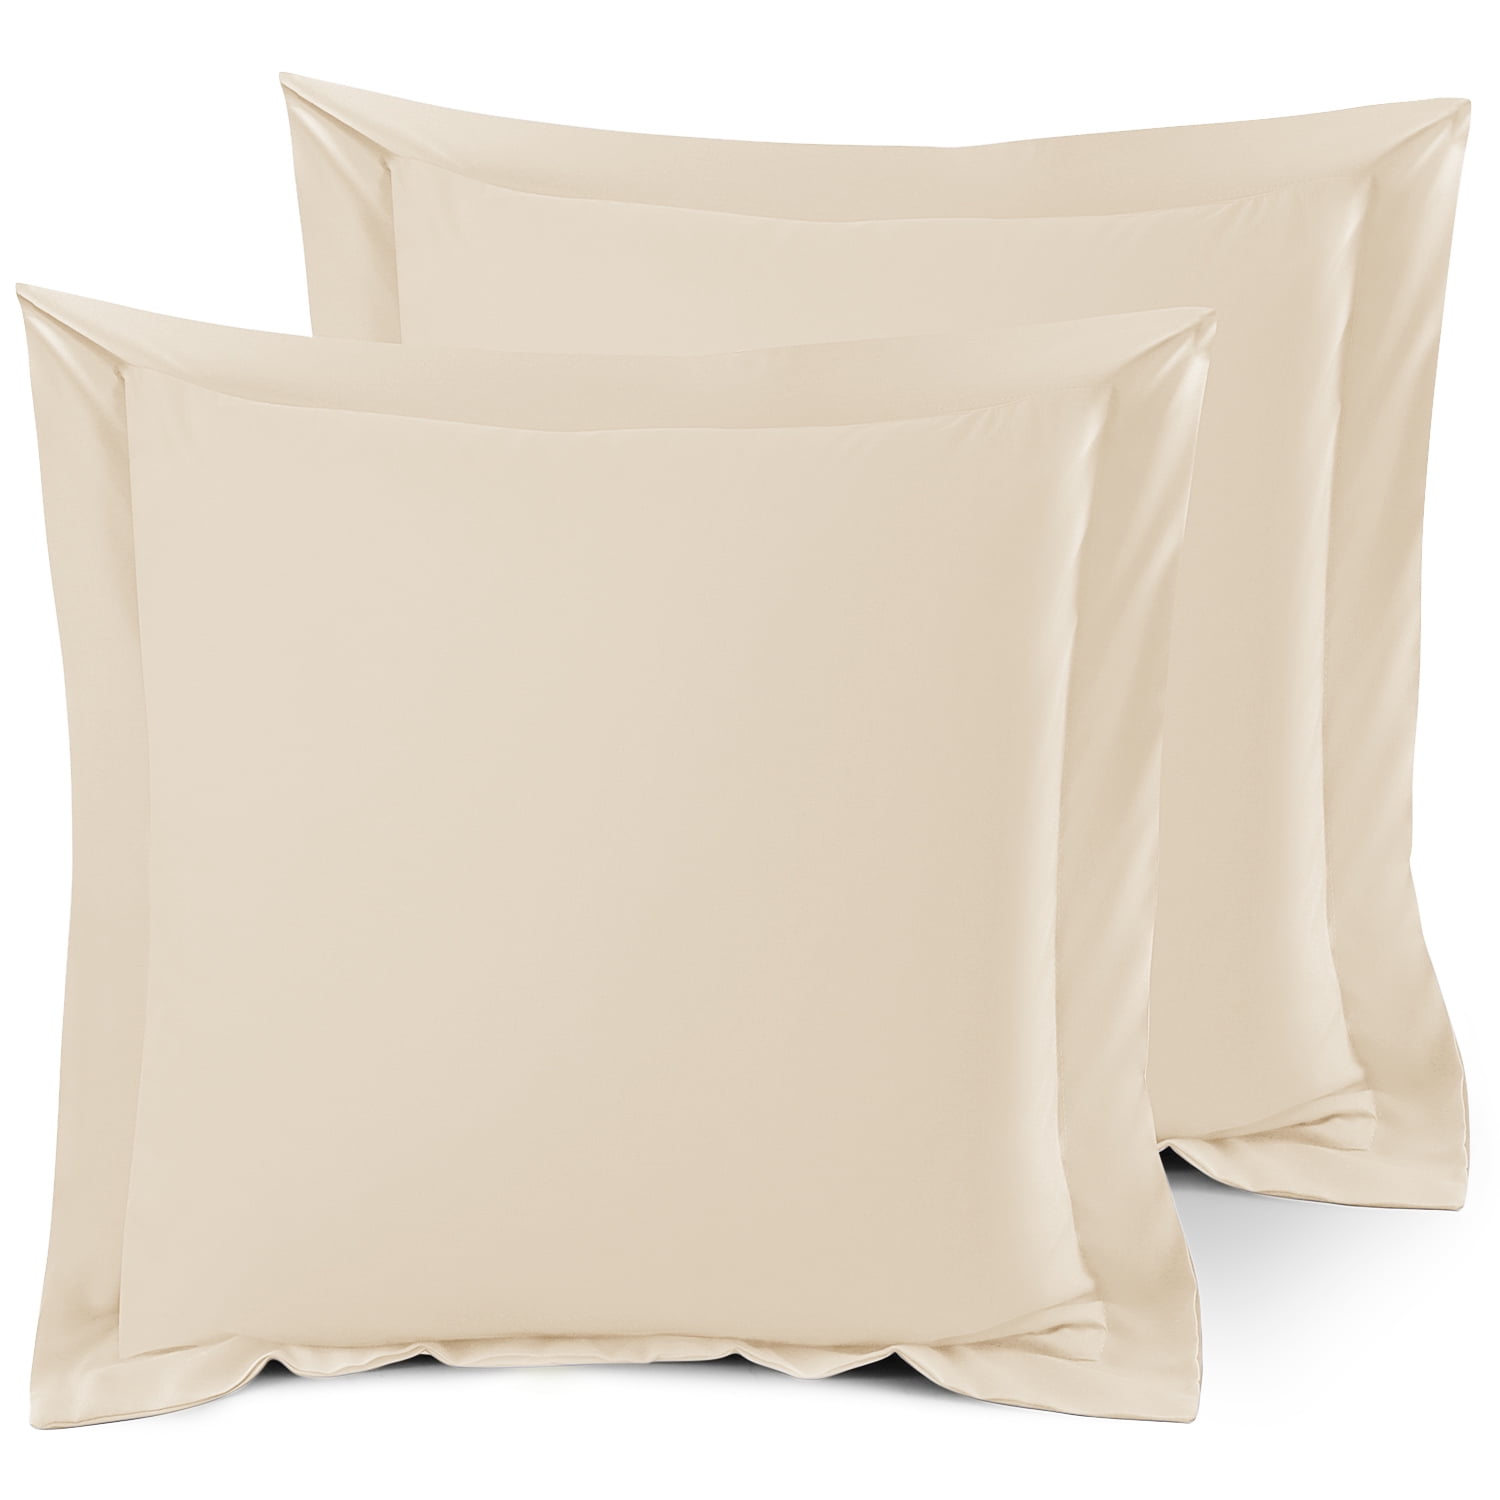 Nestl Set Of 2 Euro 26x26 Size Pillow Shams Beige Cream Hotel Luxury